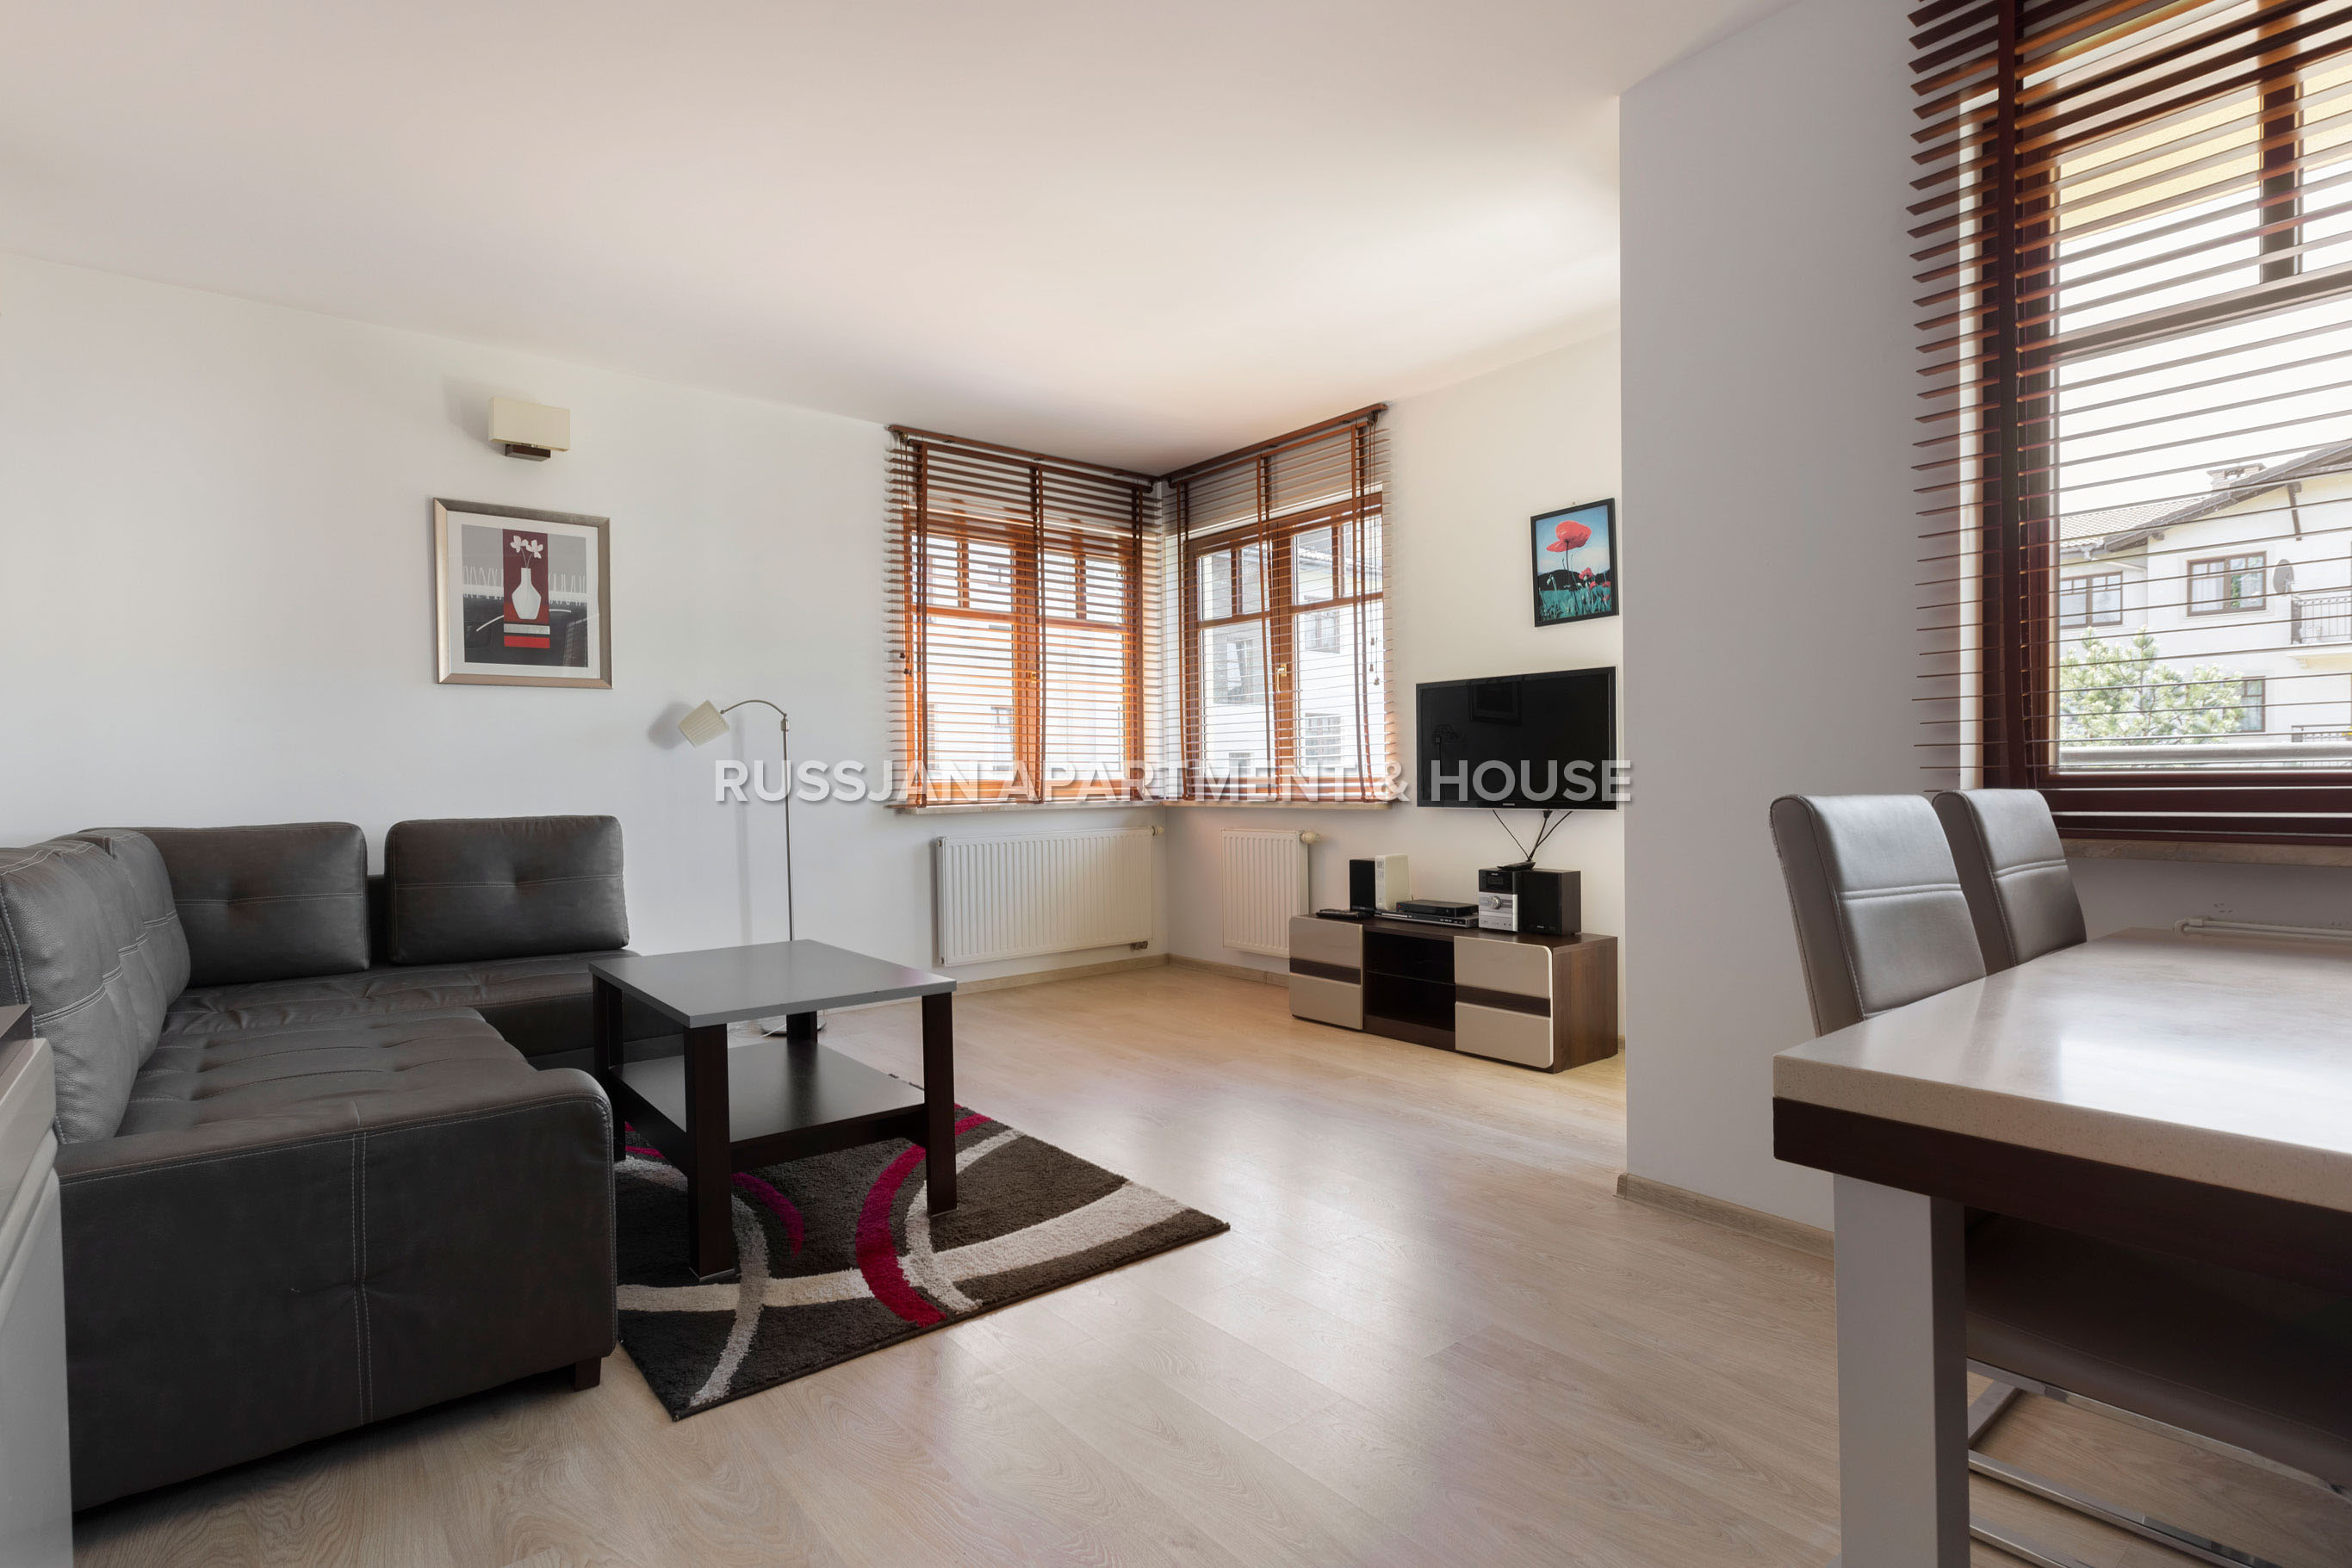 MIeszkanie Sopot Dolny Ulica 3 Maja | RUSSJAN Apartment & House